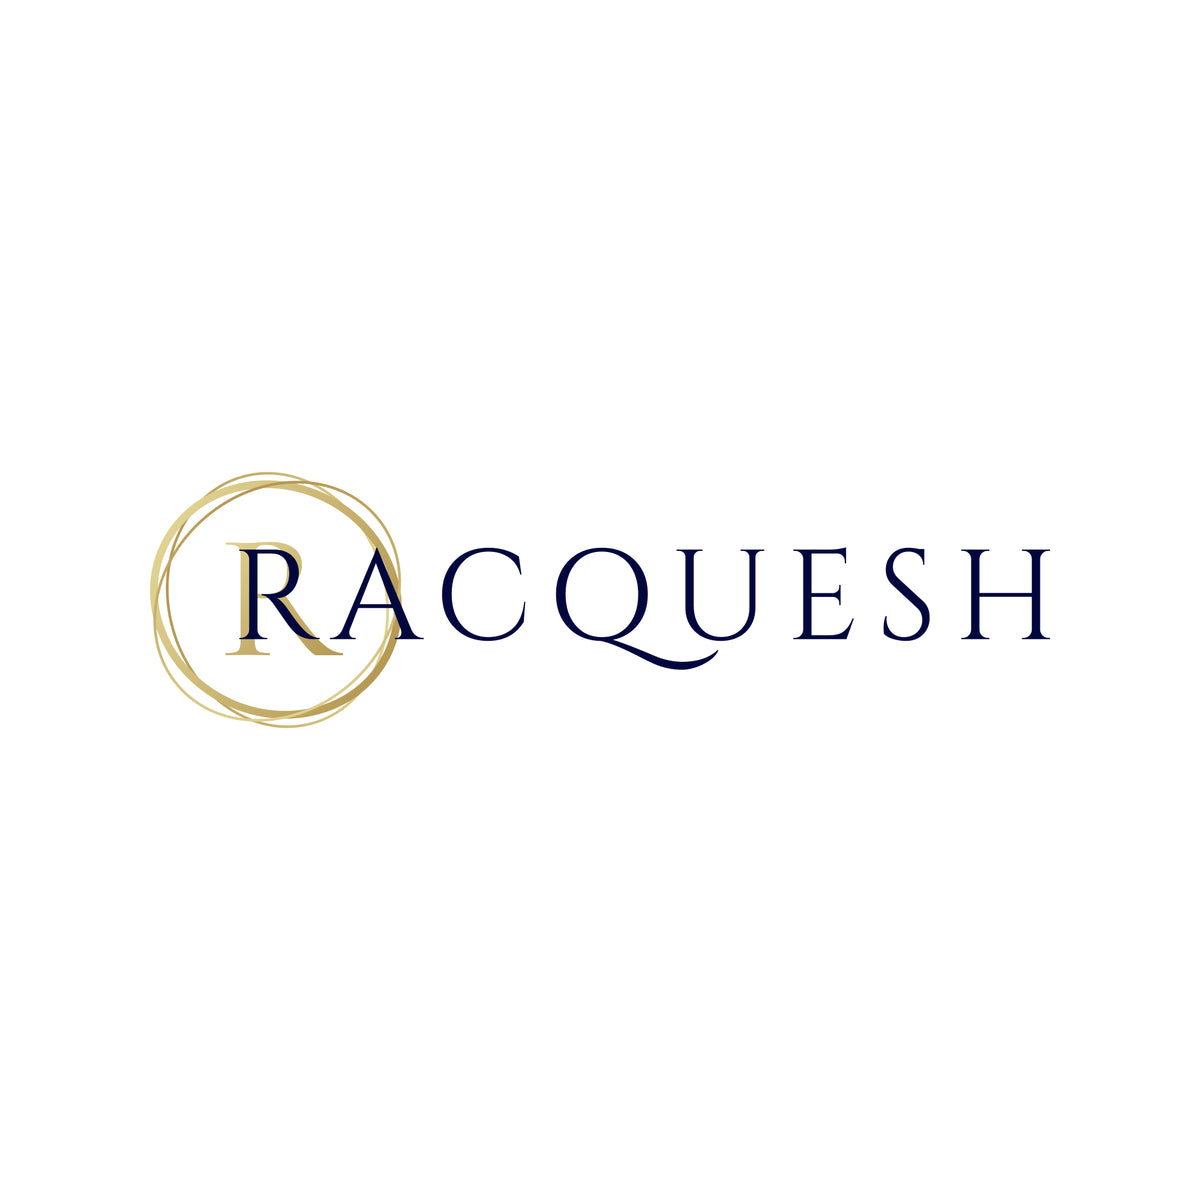 Racquesh